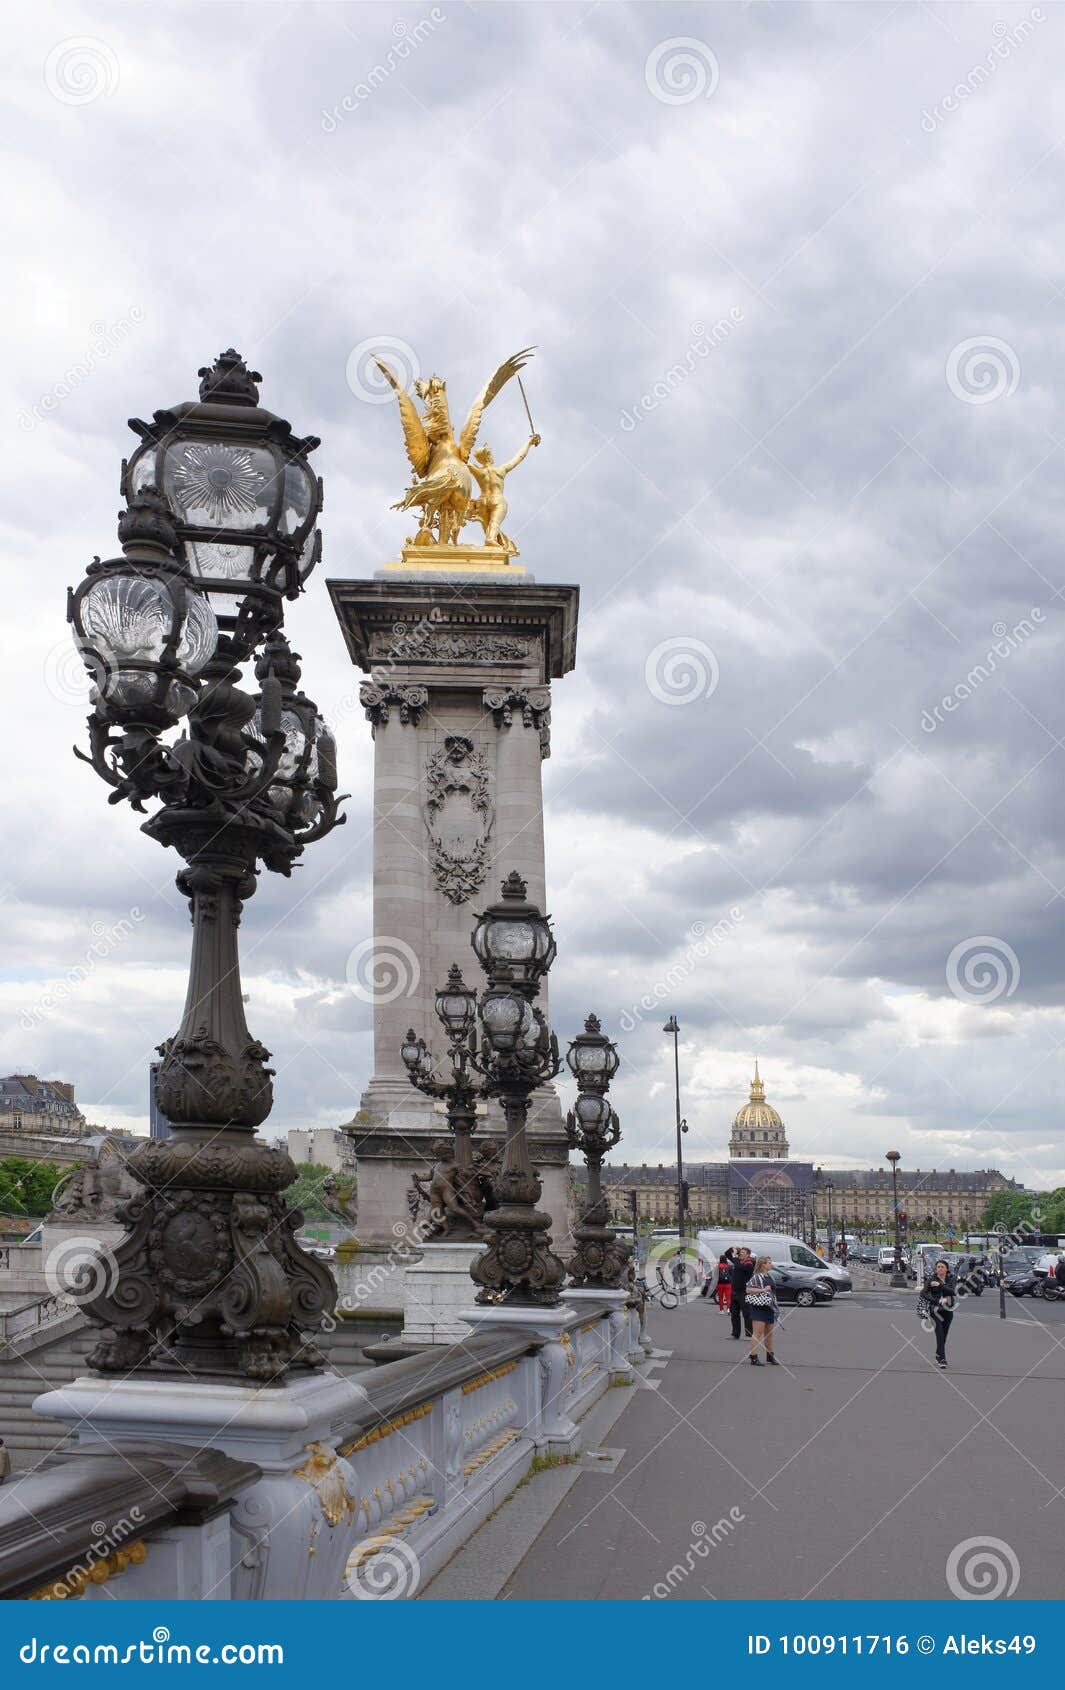 Statues Of Fames On The Pont Alexandre III Bridge In Paris 